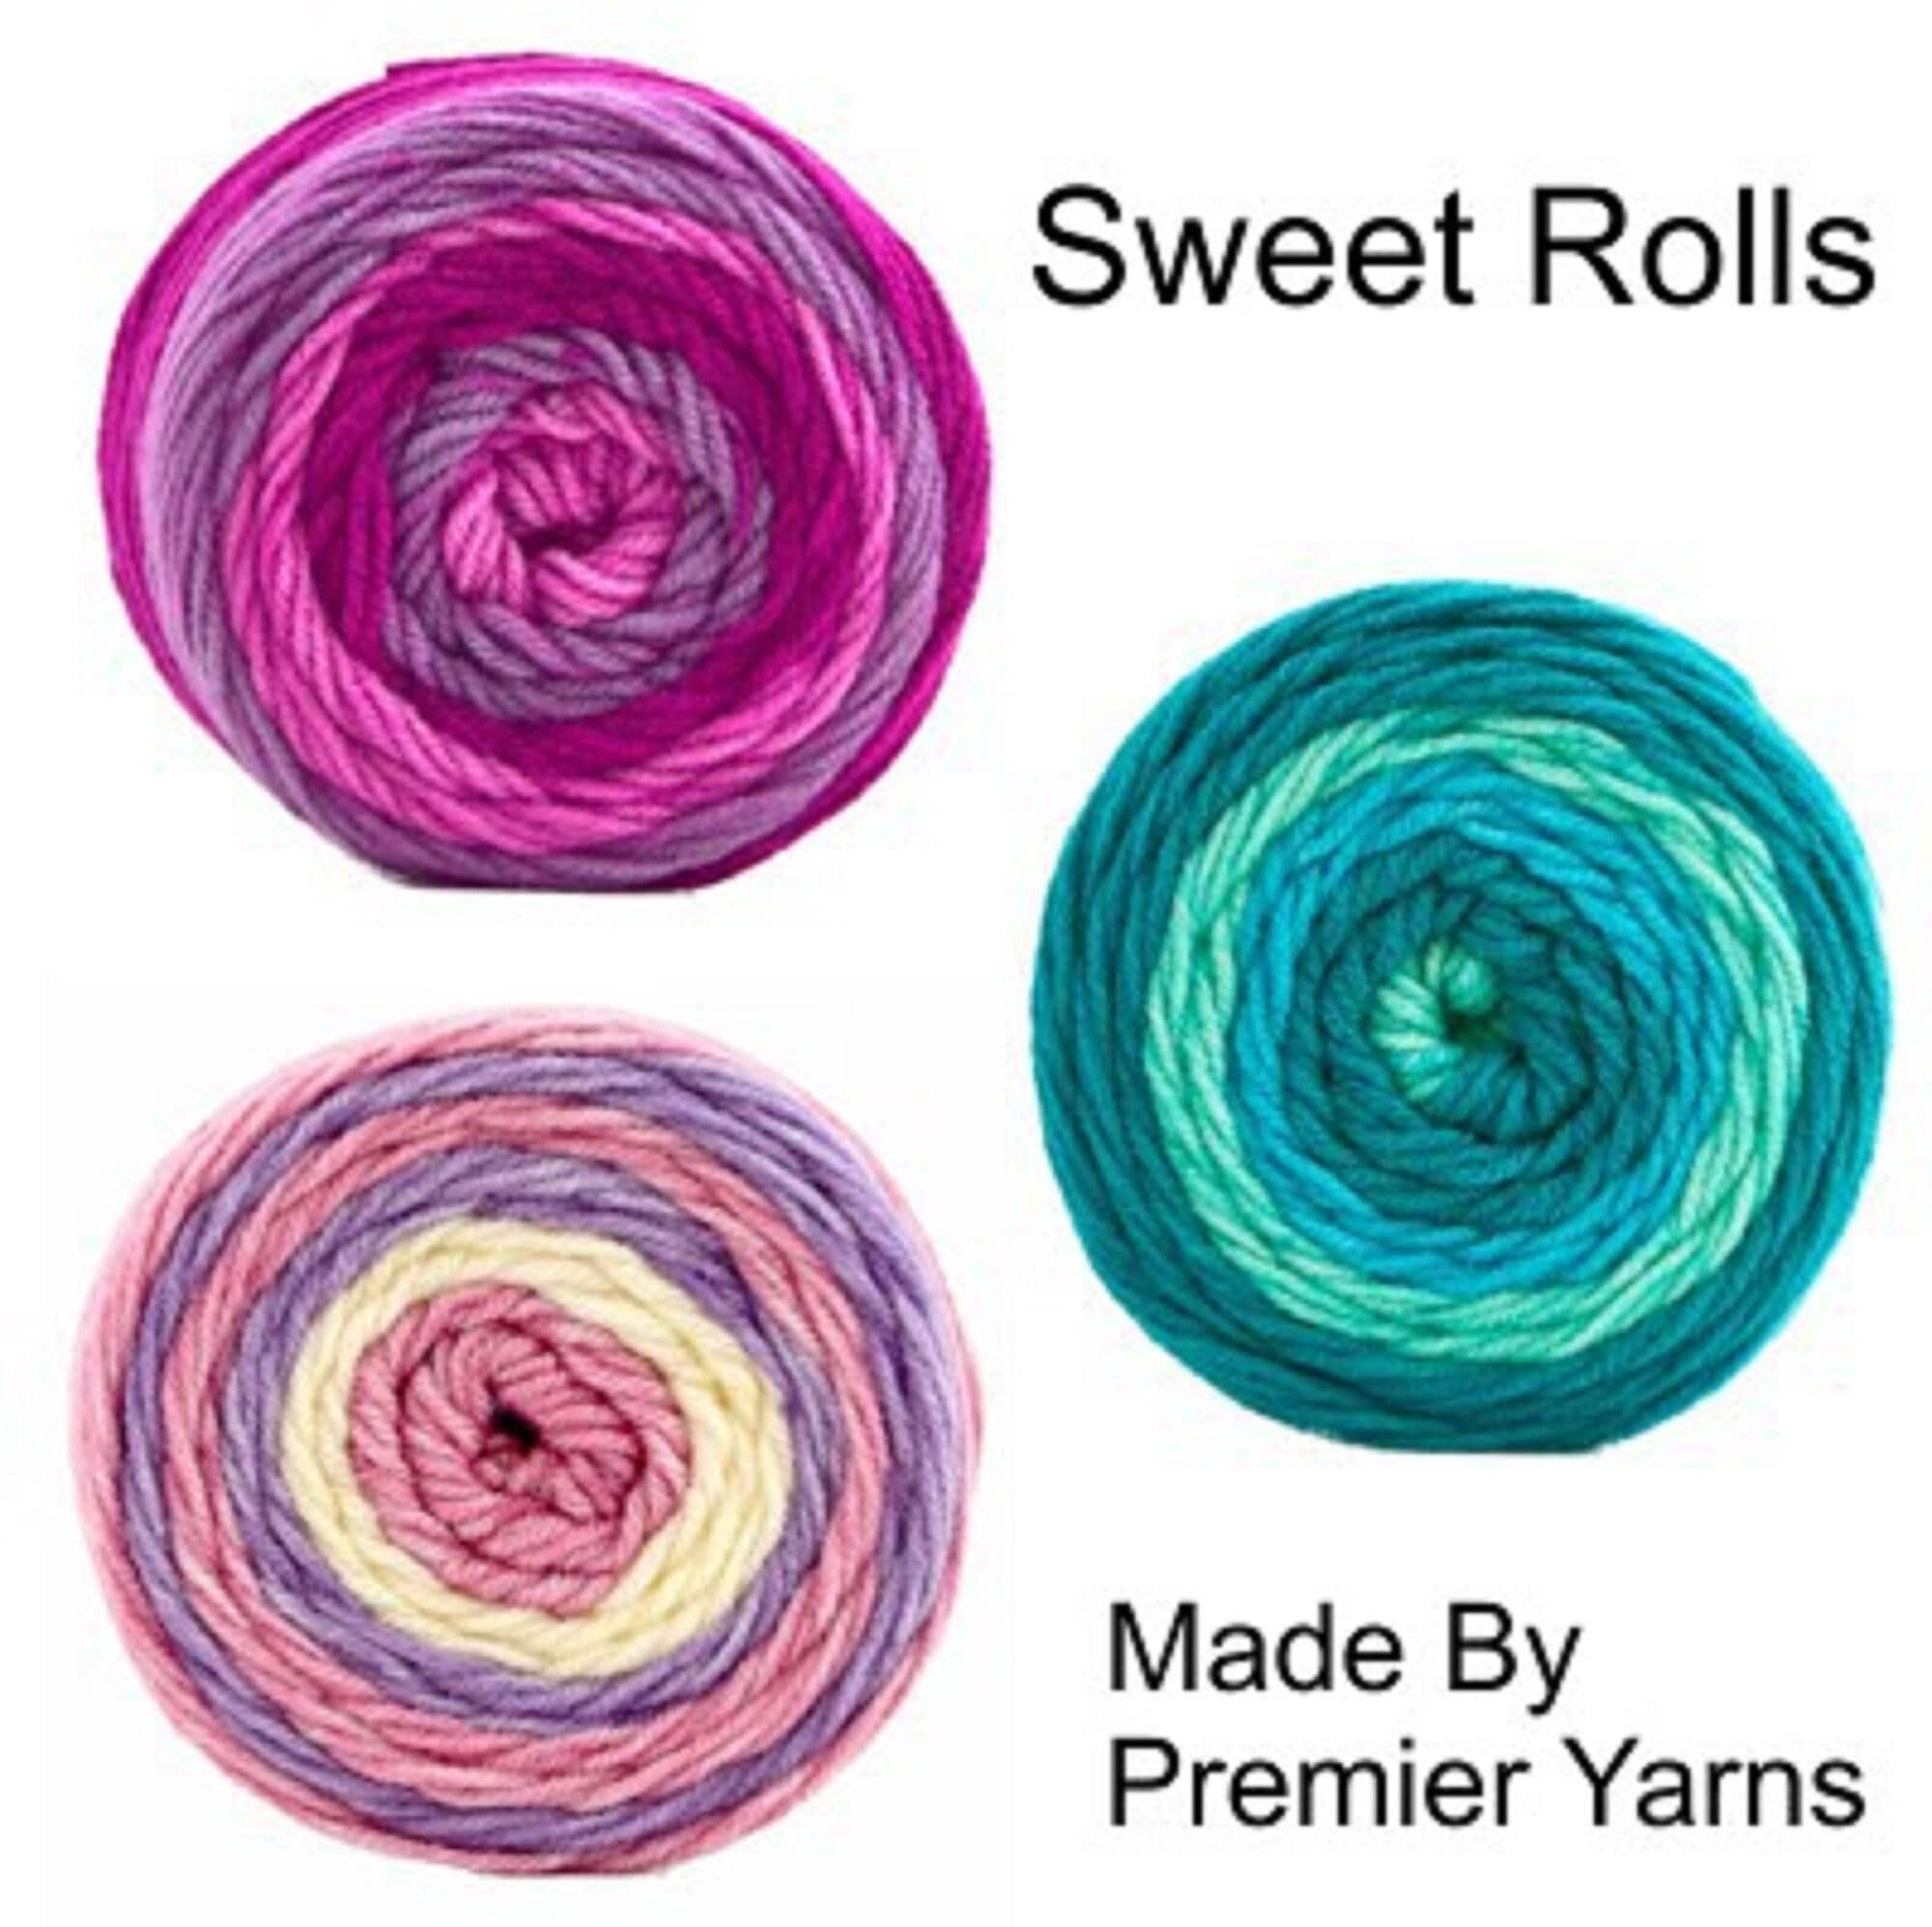 caralin 100g Hand Knitting Cake Yarn Gradient Ombre Colorful Crochet Woven  DIY Thread